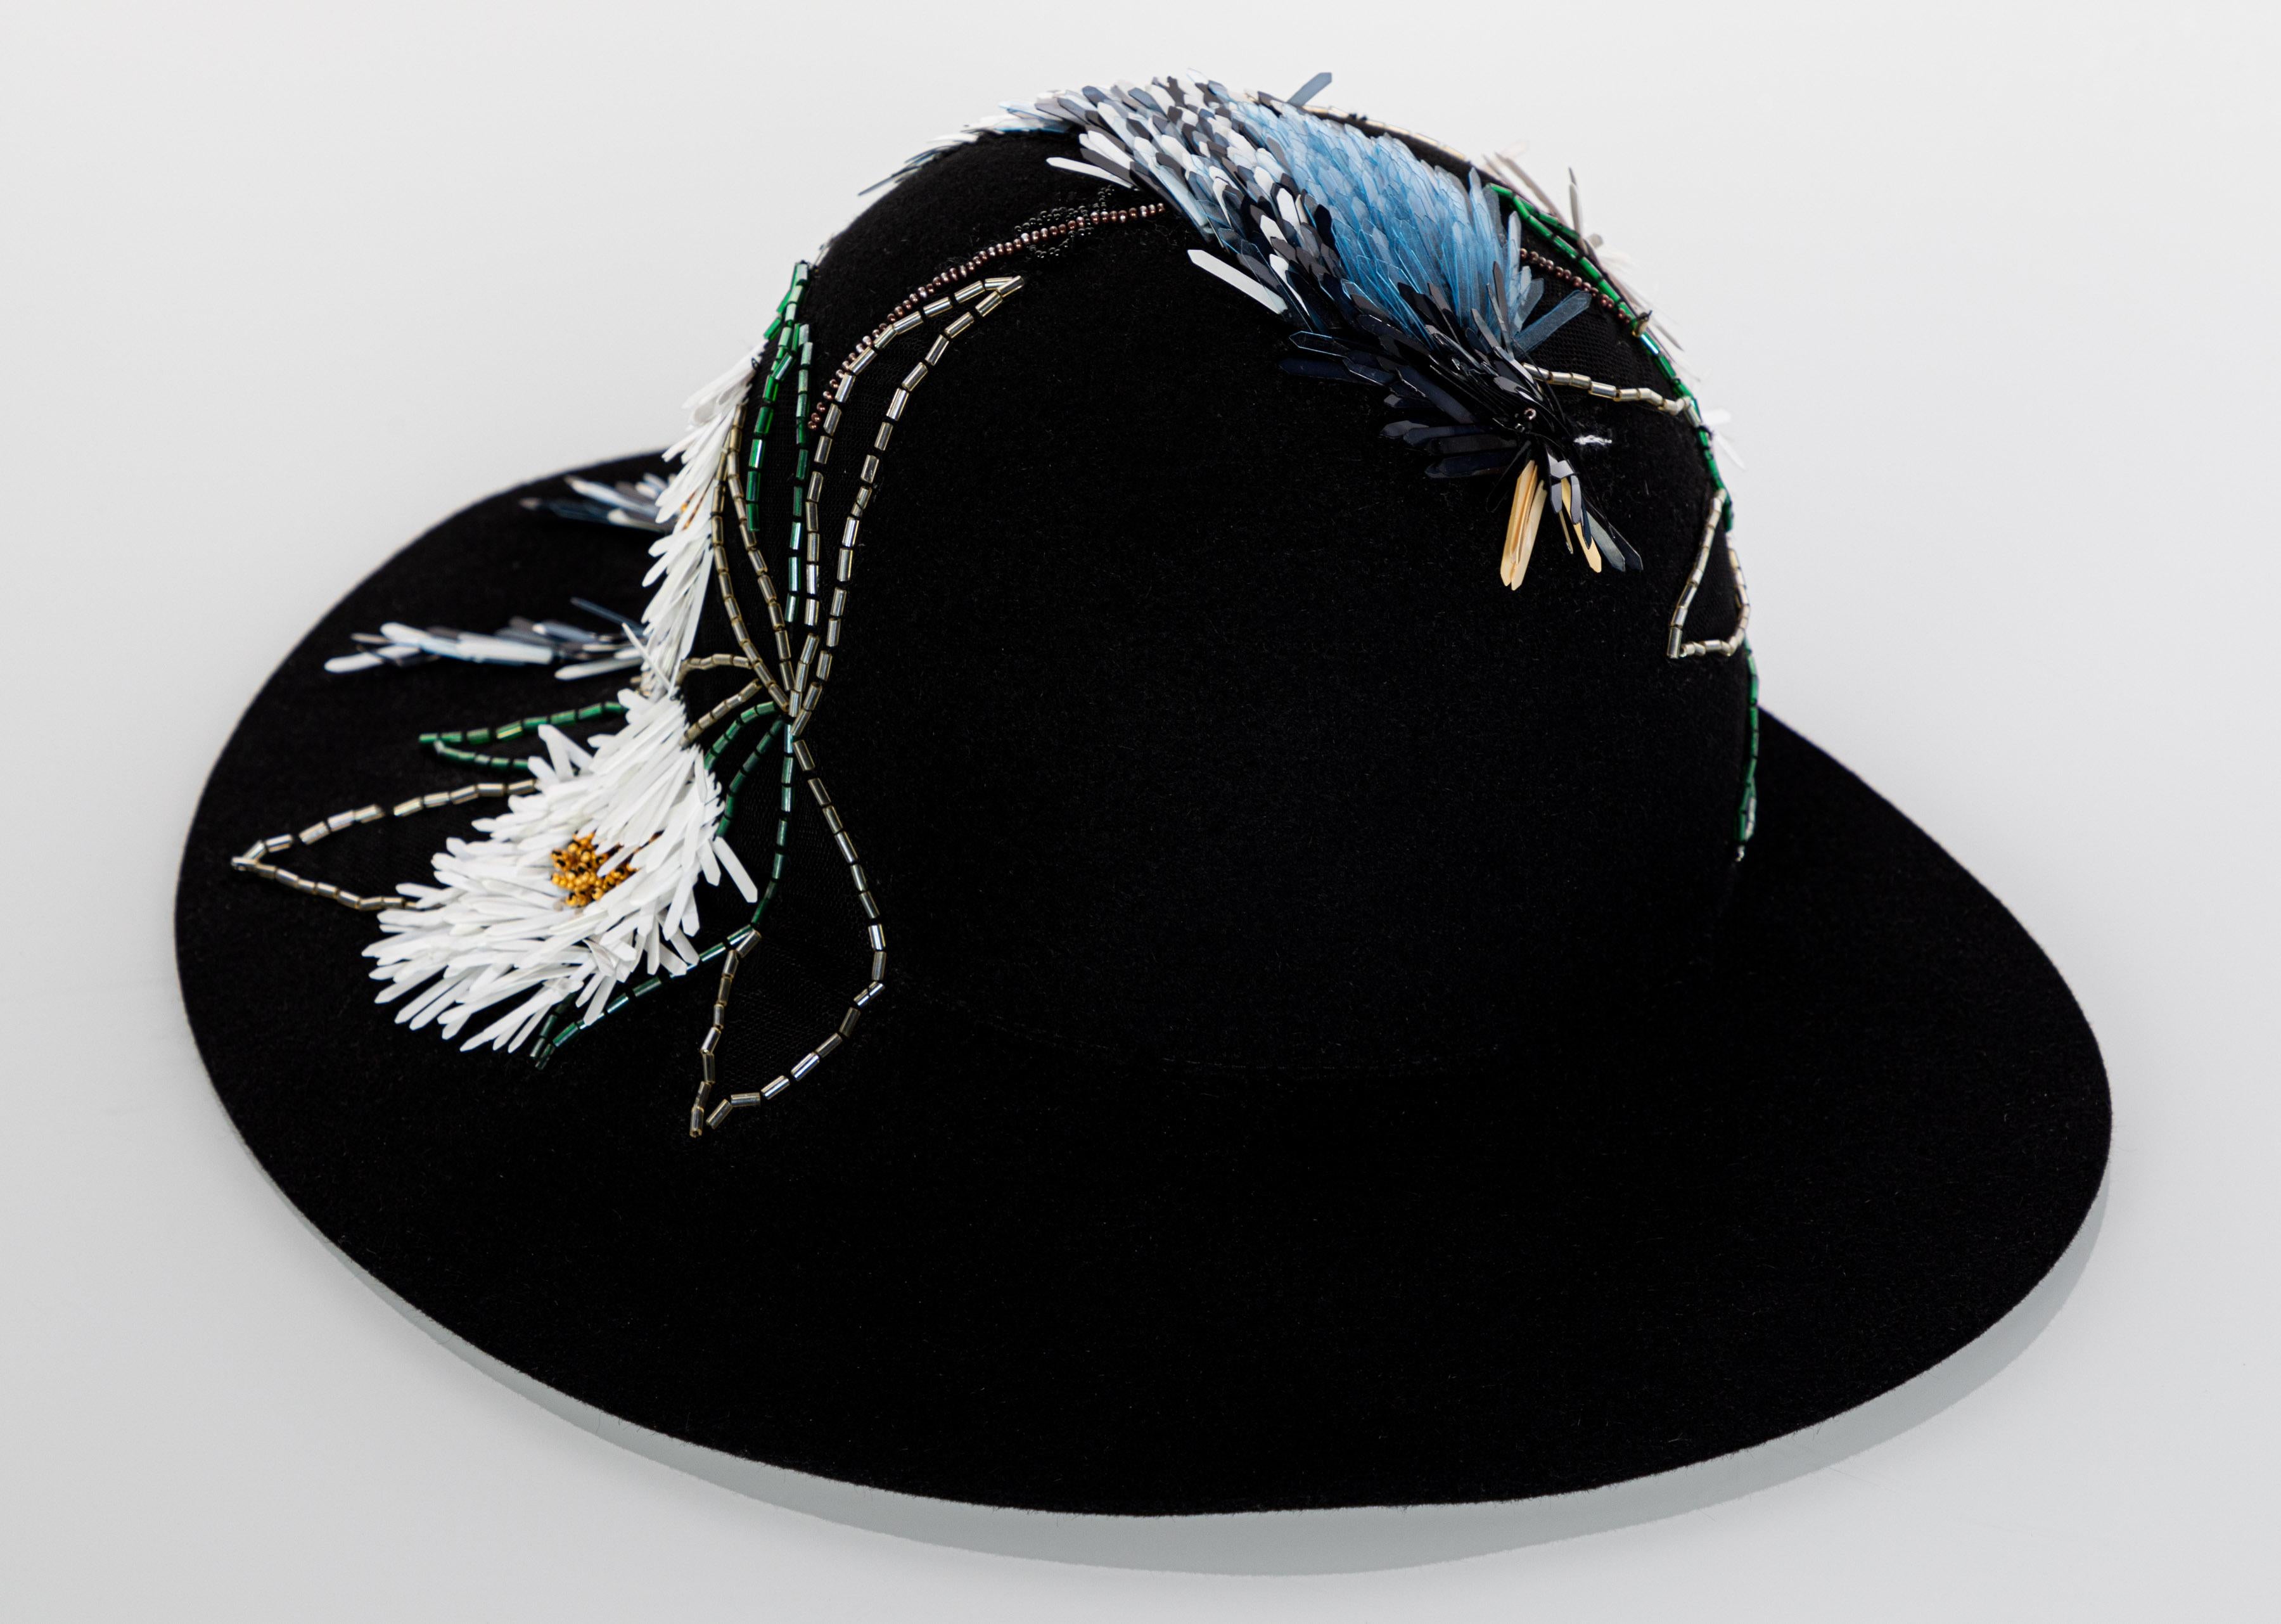 Women's Lanvin Alber Elbaz Embellished Black Felt Hat, 2015